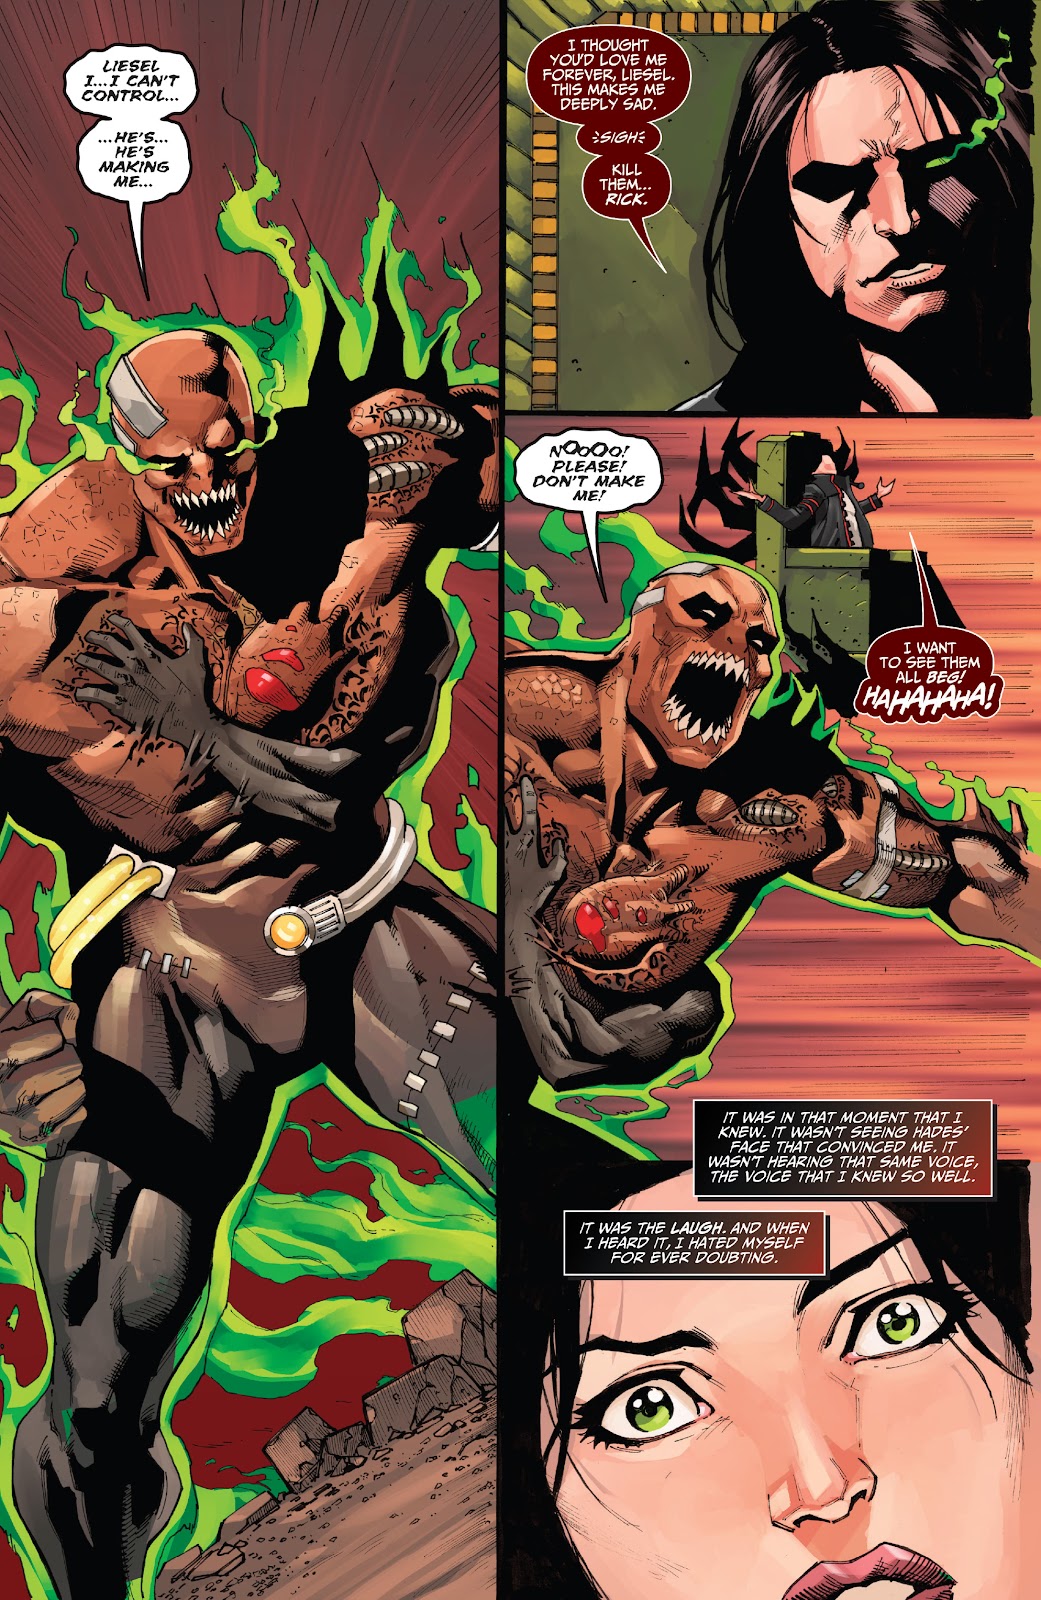 Van Helsing: Return of the League of Monsters issue 2 - Page 24